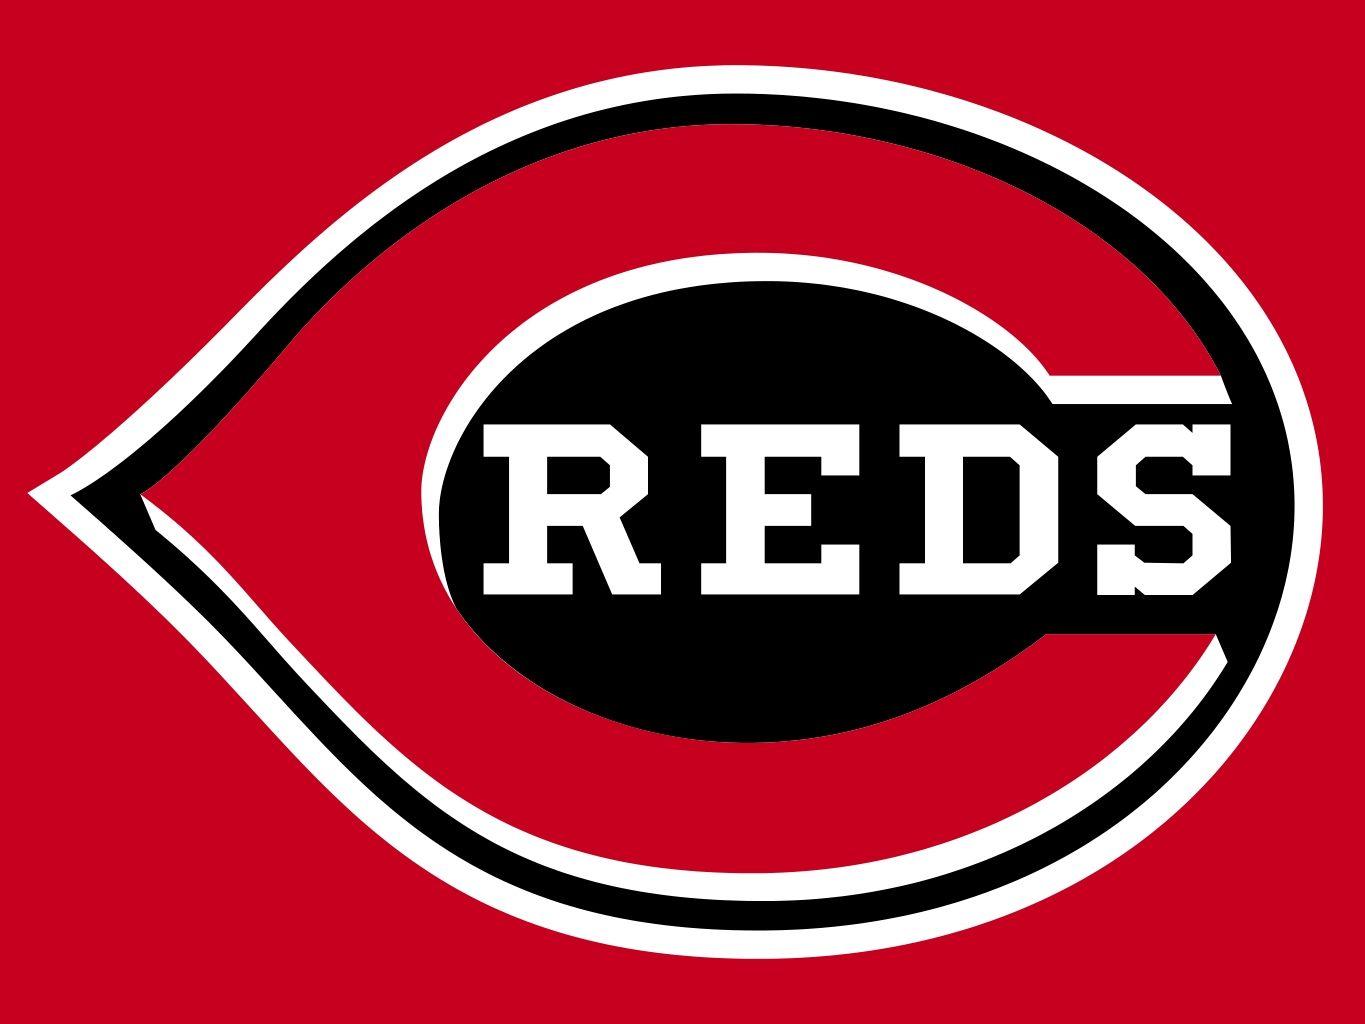 Reds Baseball Logo - Cincinnati Reds Team. Cincinnati Reds Team Logo Wallpaper. Free